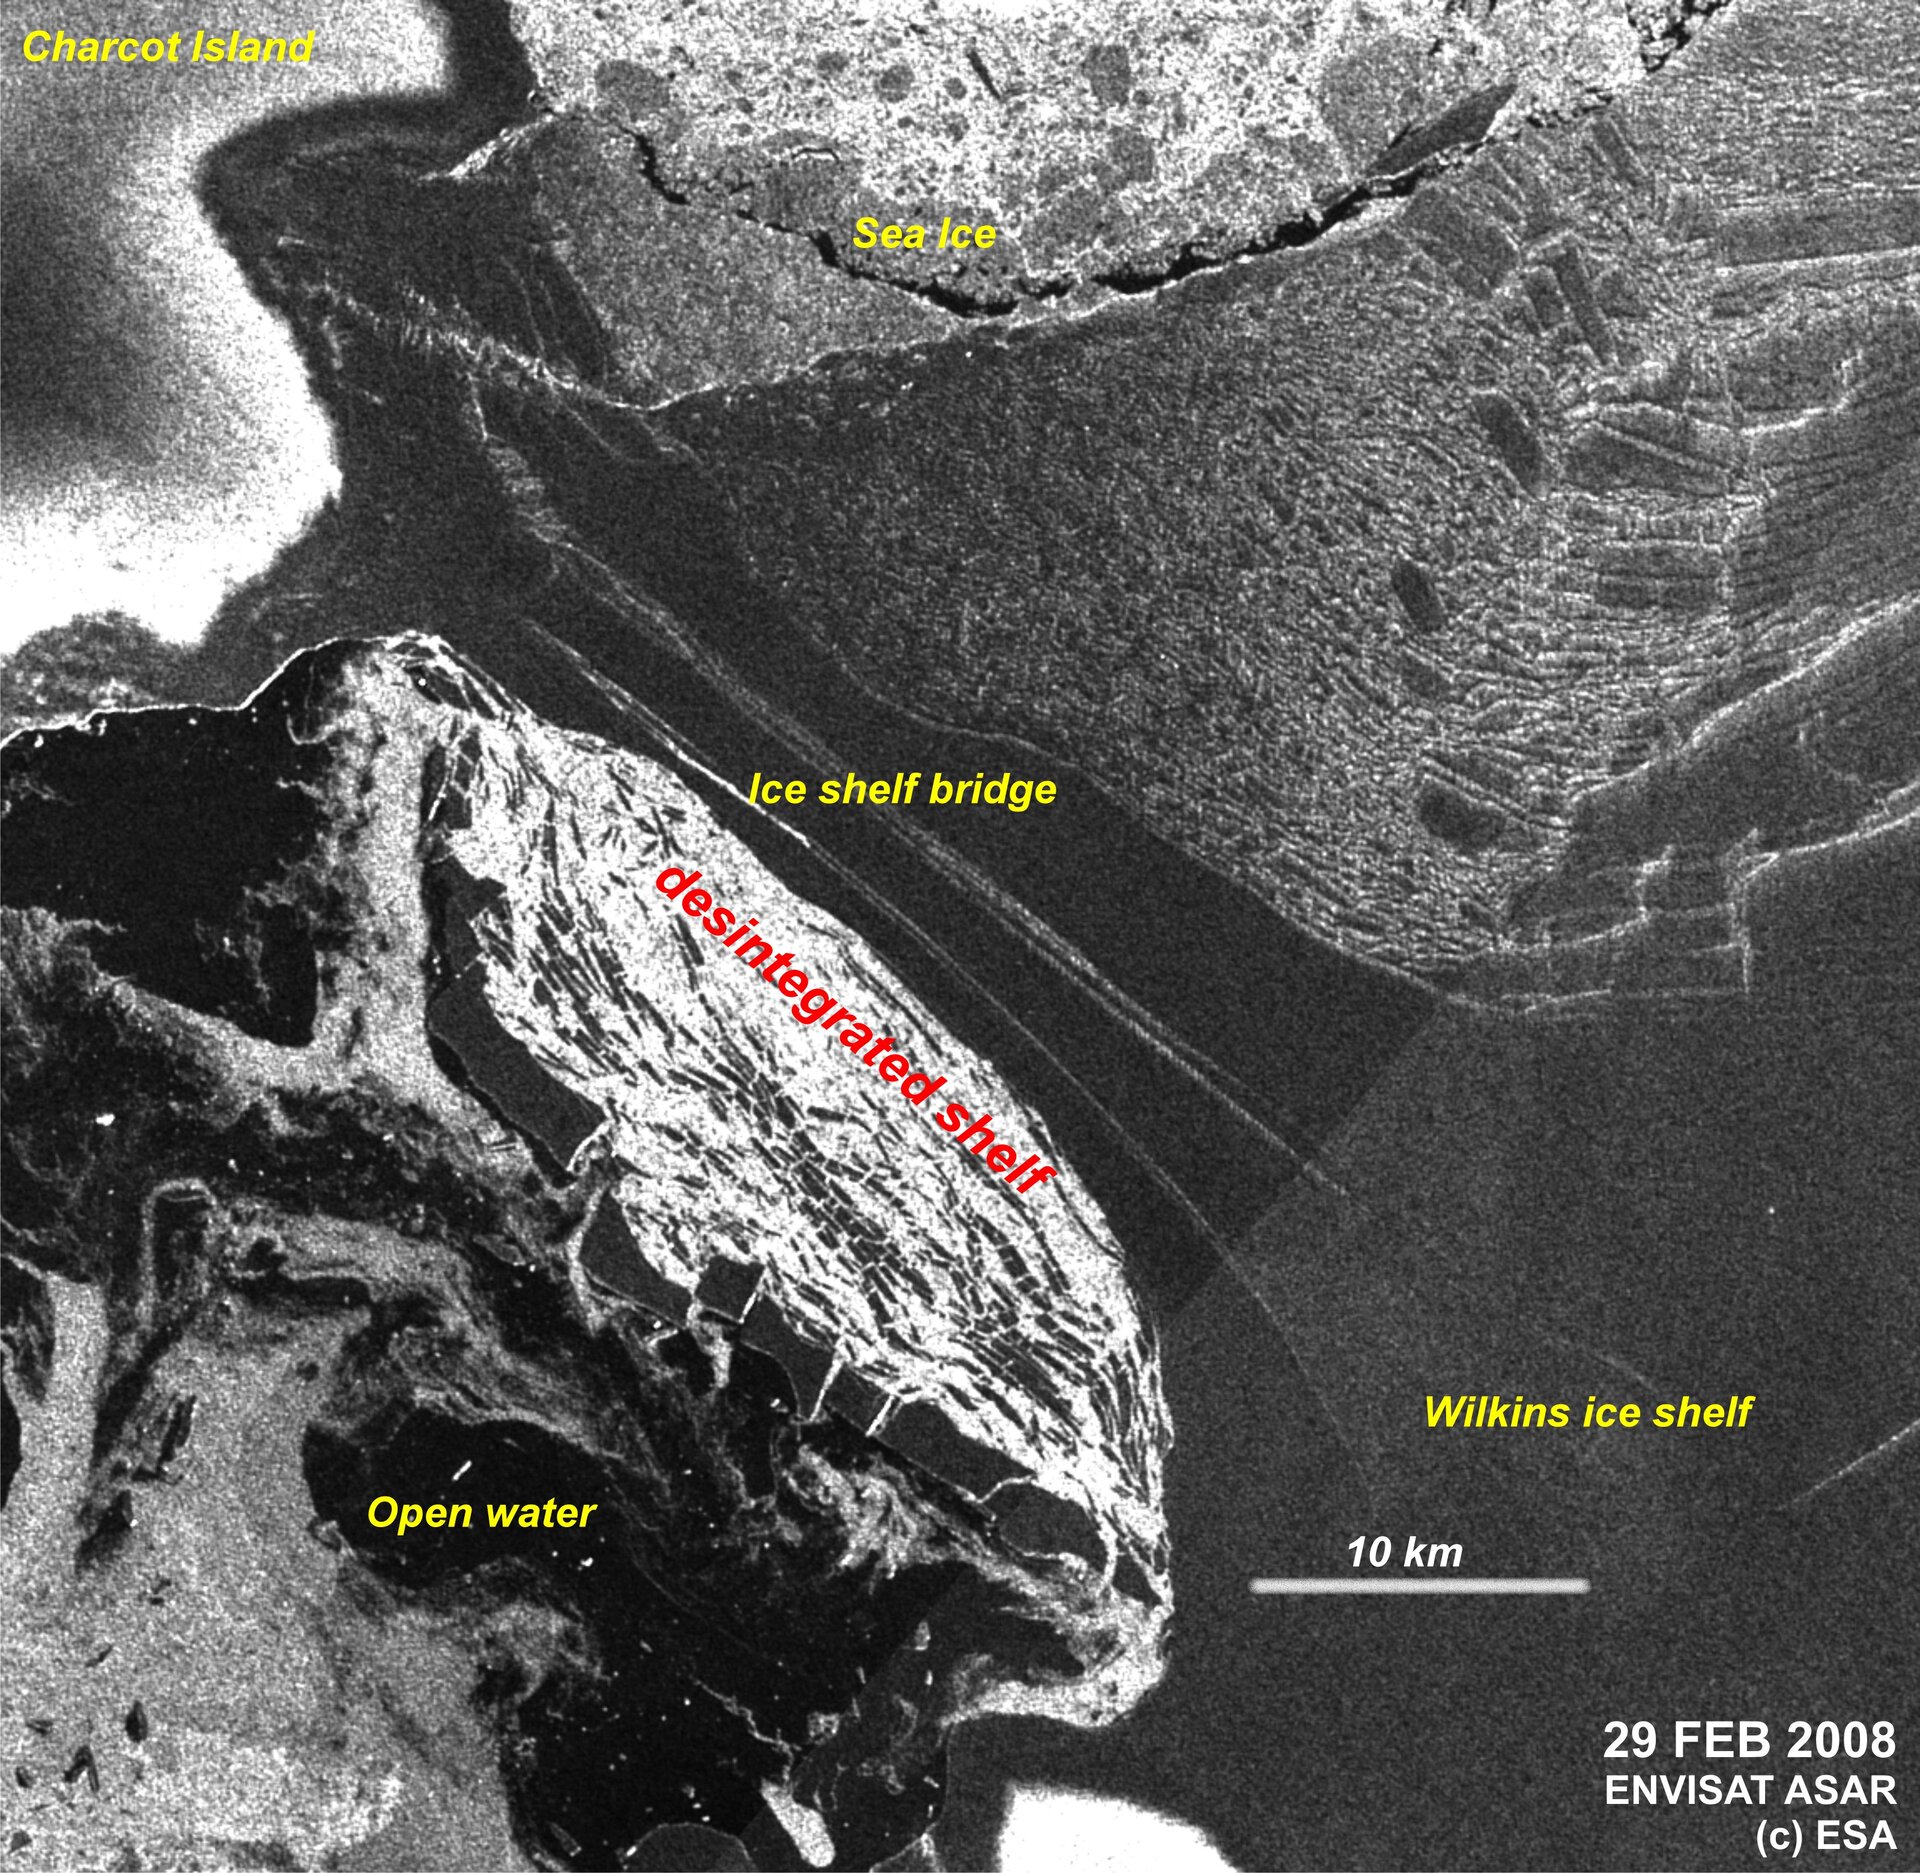 Envisat ASAR image of the Wilkins Ice Shelf